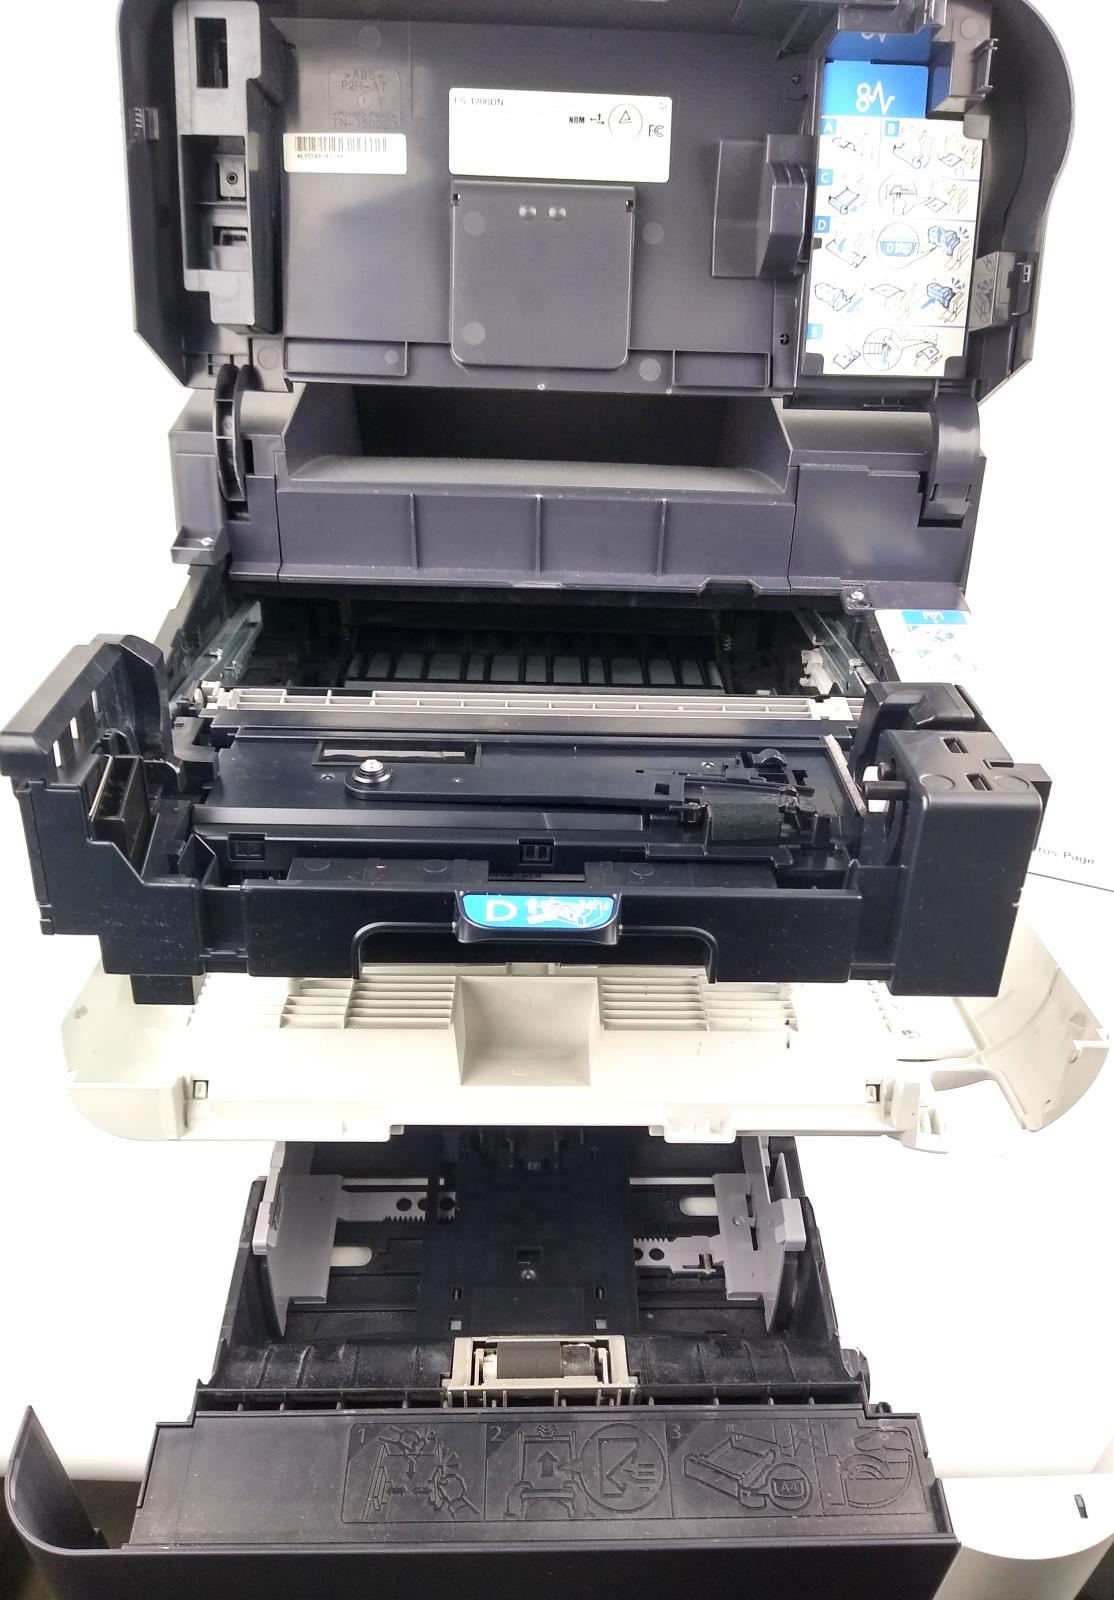 kyocera fs 4200dn printer